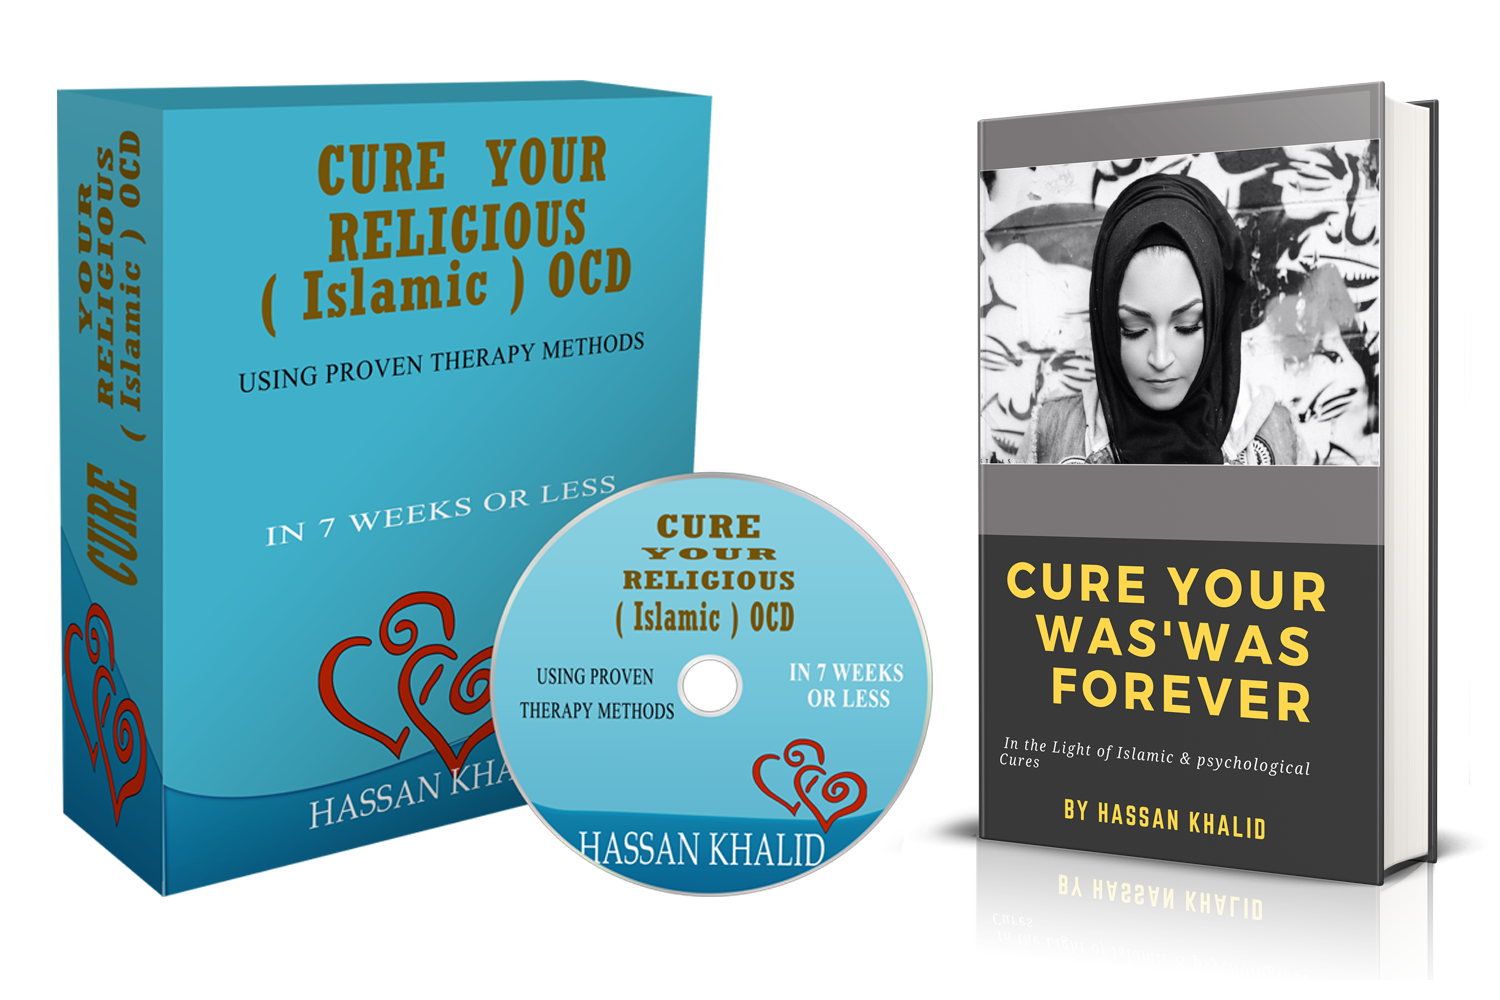 Islamic OCD Cure